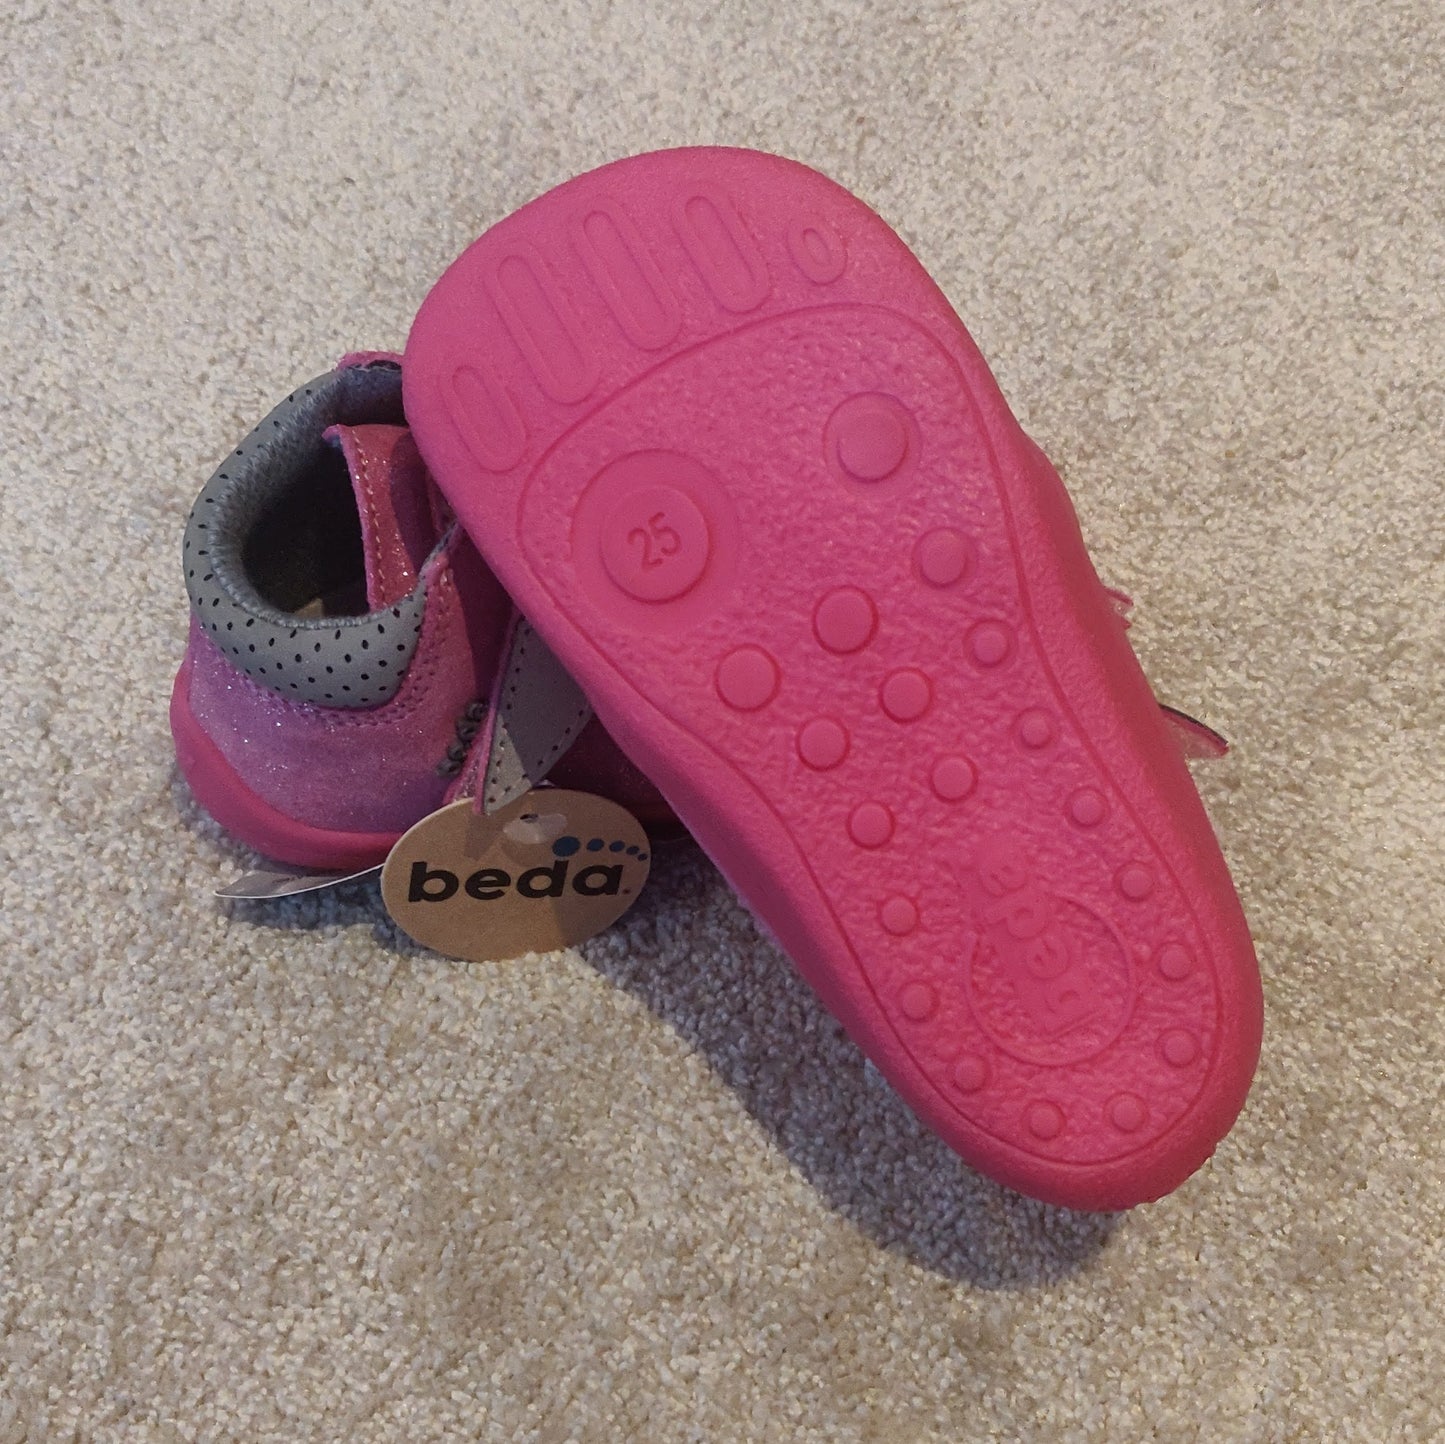 Beda Barefoot TEX mid-season shoes, Janette 22-27